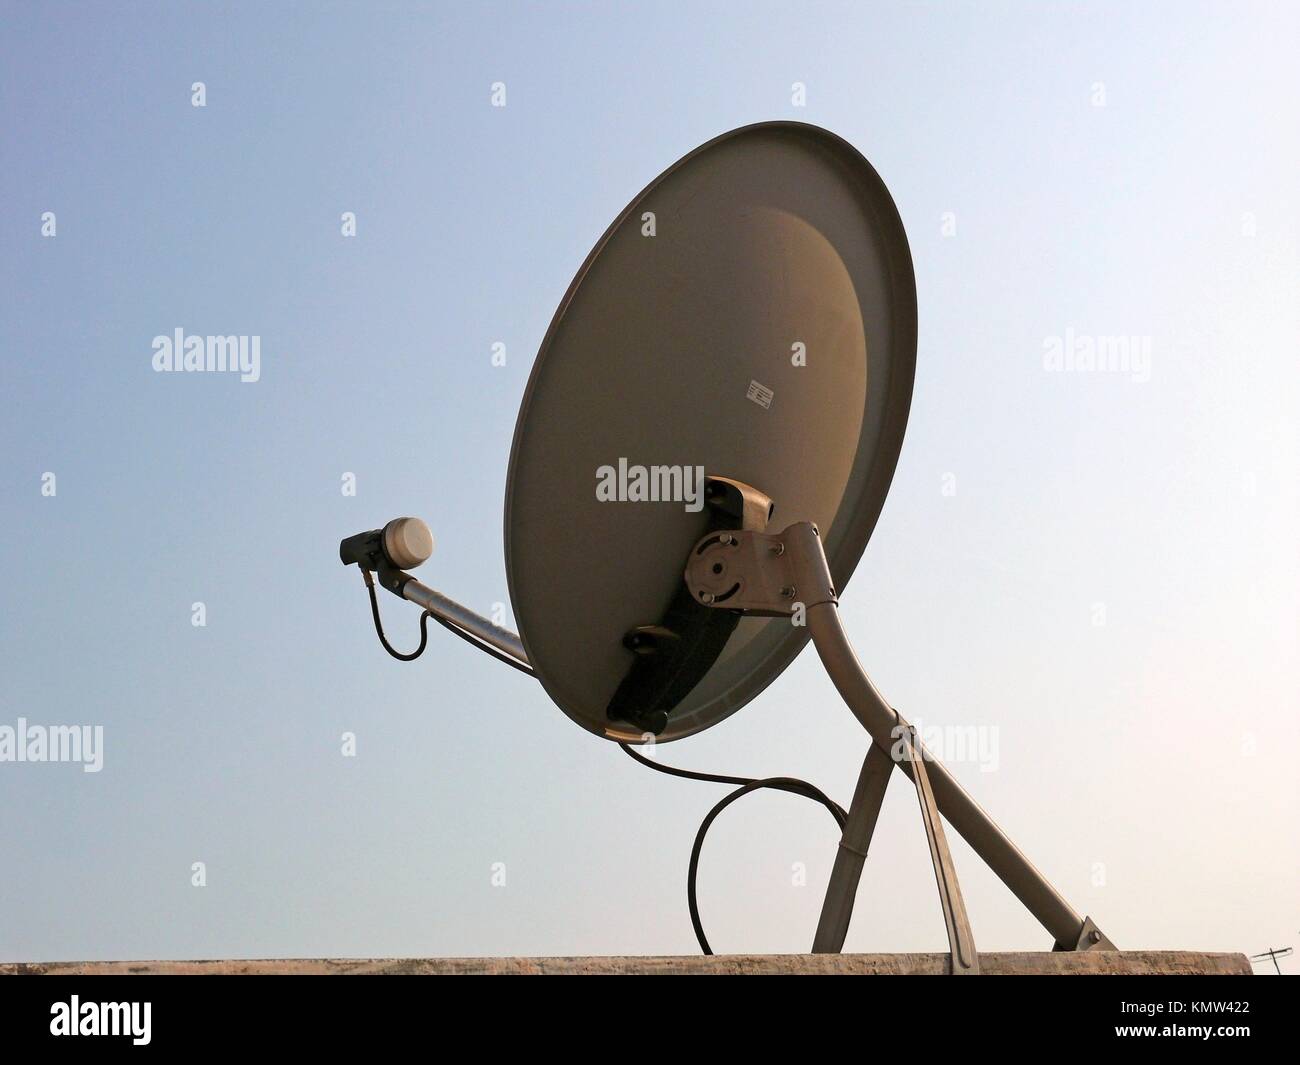 Dish antenna of a television set, India Stock Photo - Alamy